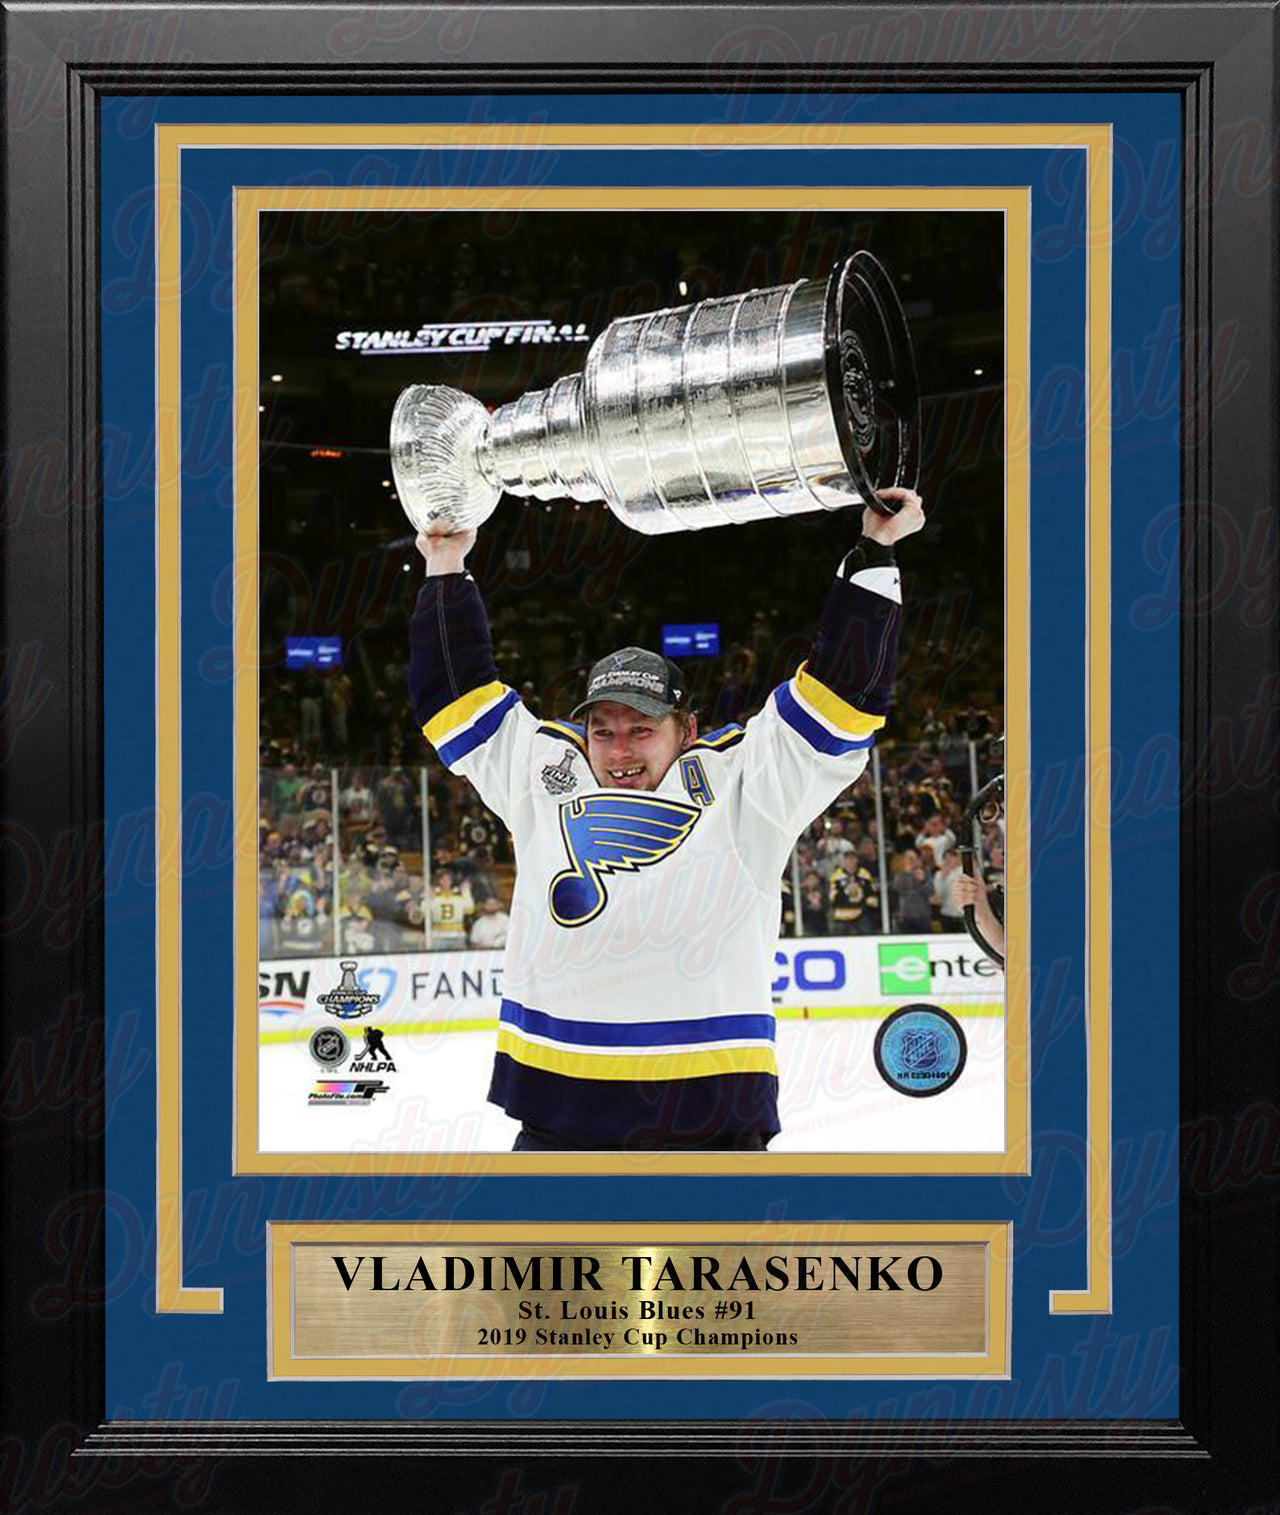 Vladimir Tarasenko St. Louis Blues 2019 Stanley Cup Champions 8" x 10" Framed Hockey Photo - Dynasty Sports & Framing 